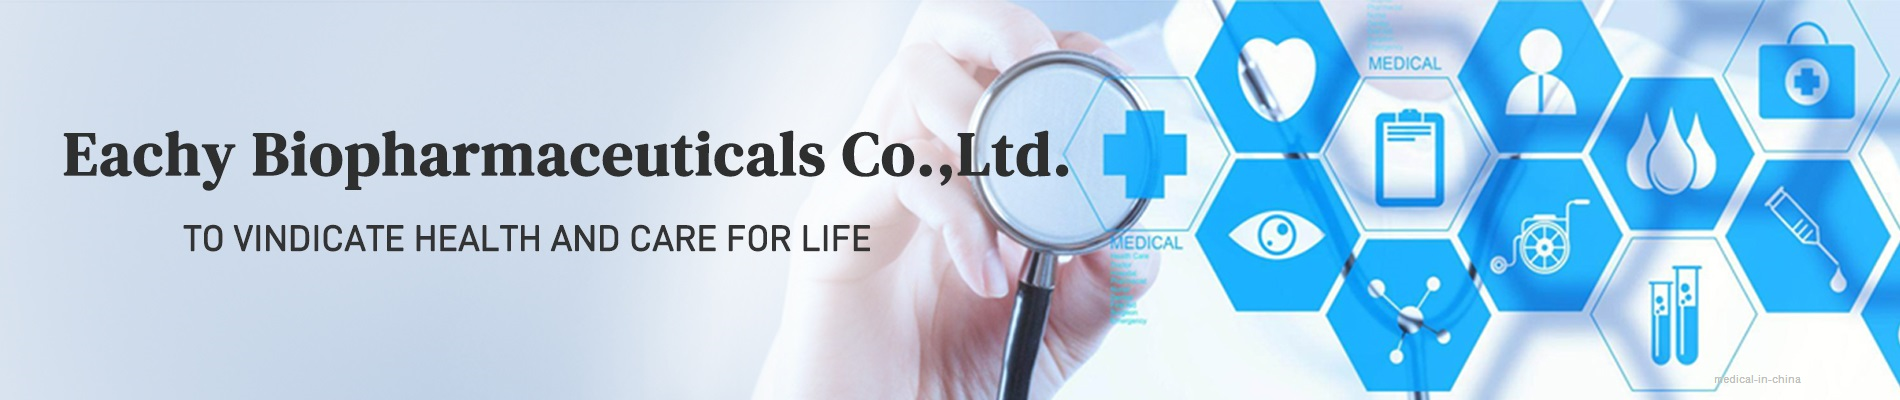 Eachy Biopharmaceuticals Co.,Ltd.